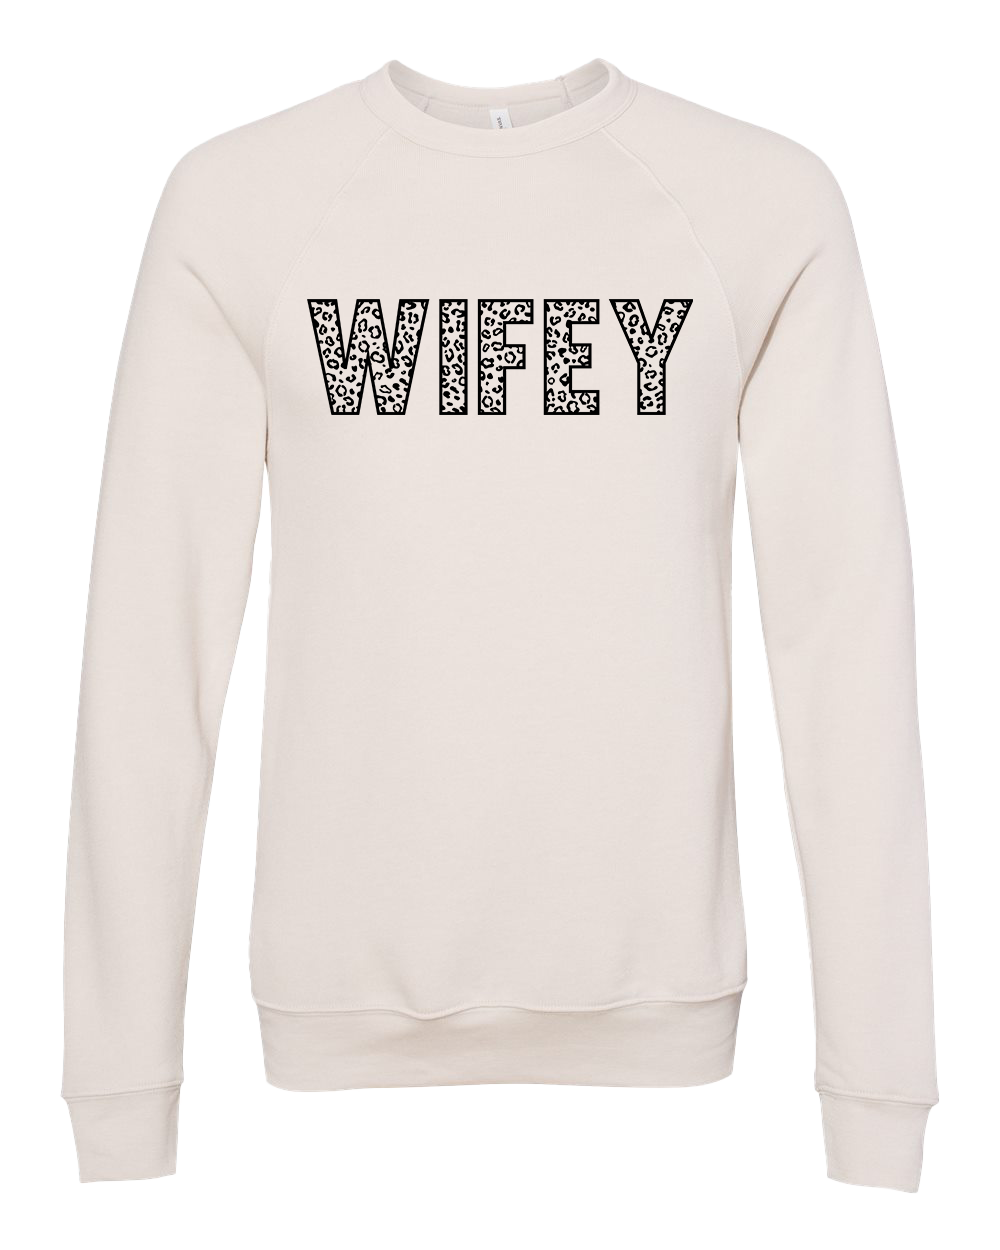 Wifey Crew Sweatshirt - Heather Dust